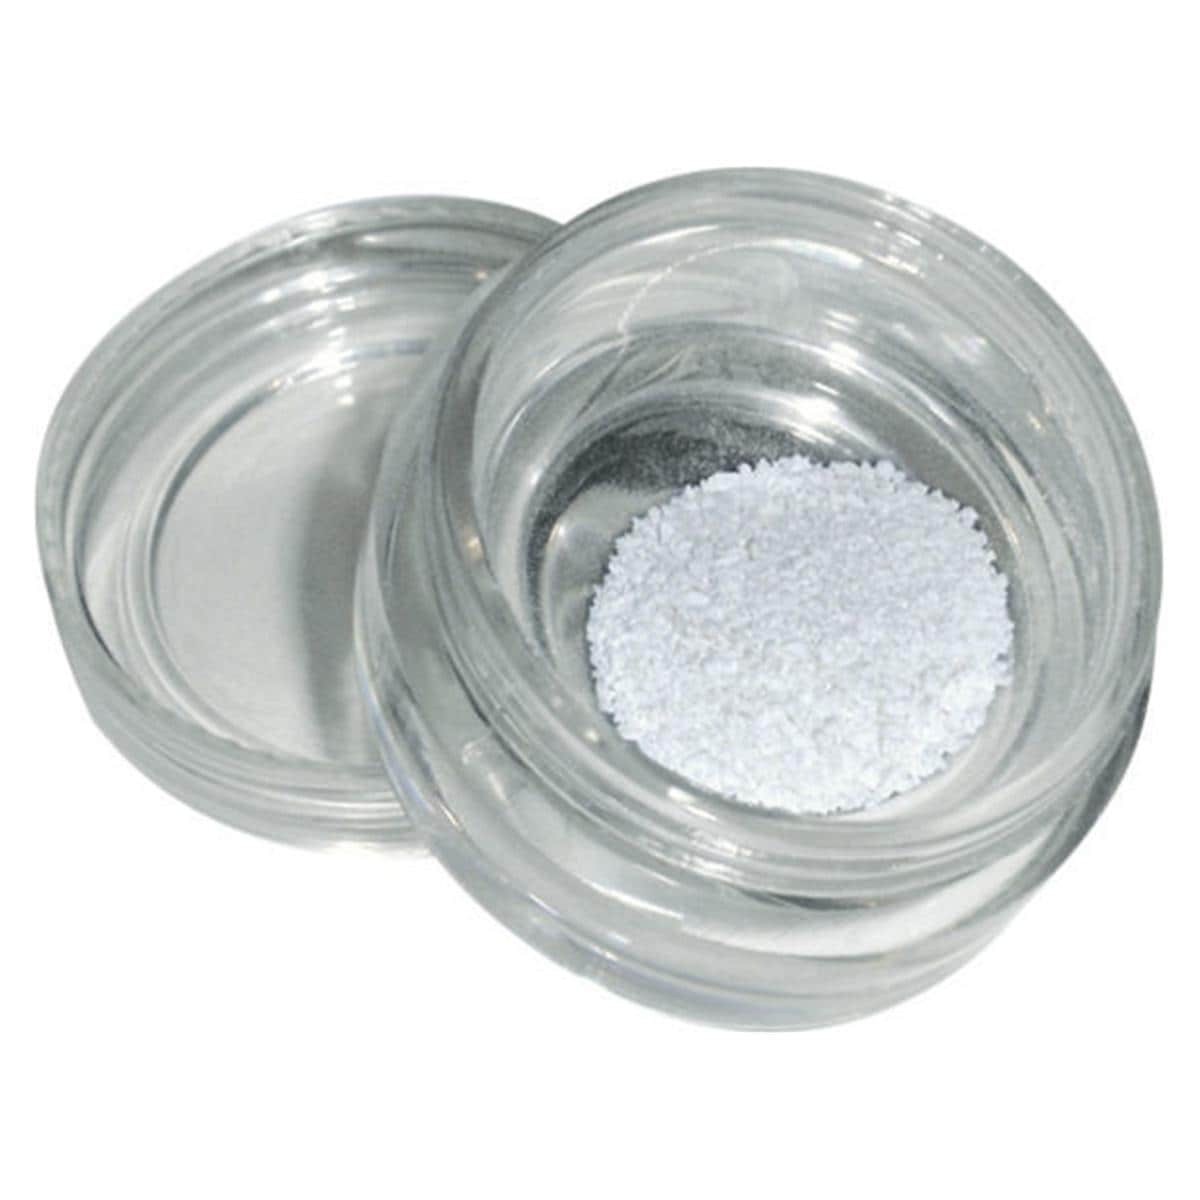 NuOss® Granulat - Spongiosagranulat (Cancellous), 1,0 - 2,0 mm, Packung 0,5 g